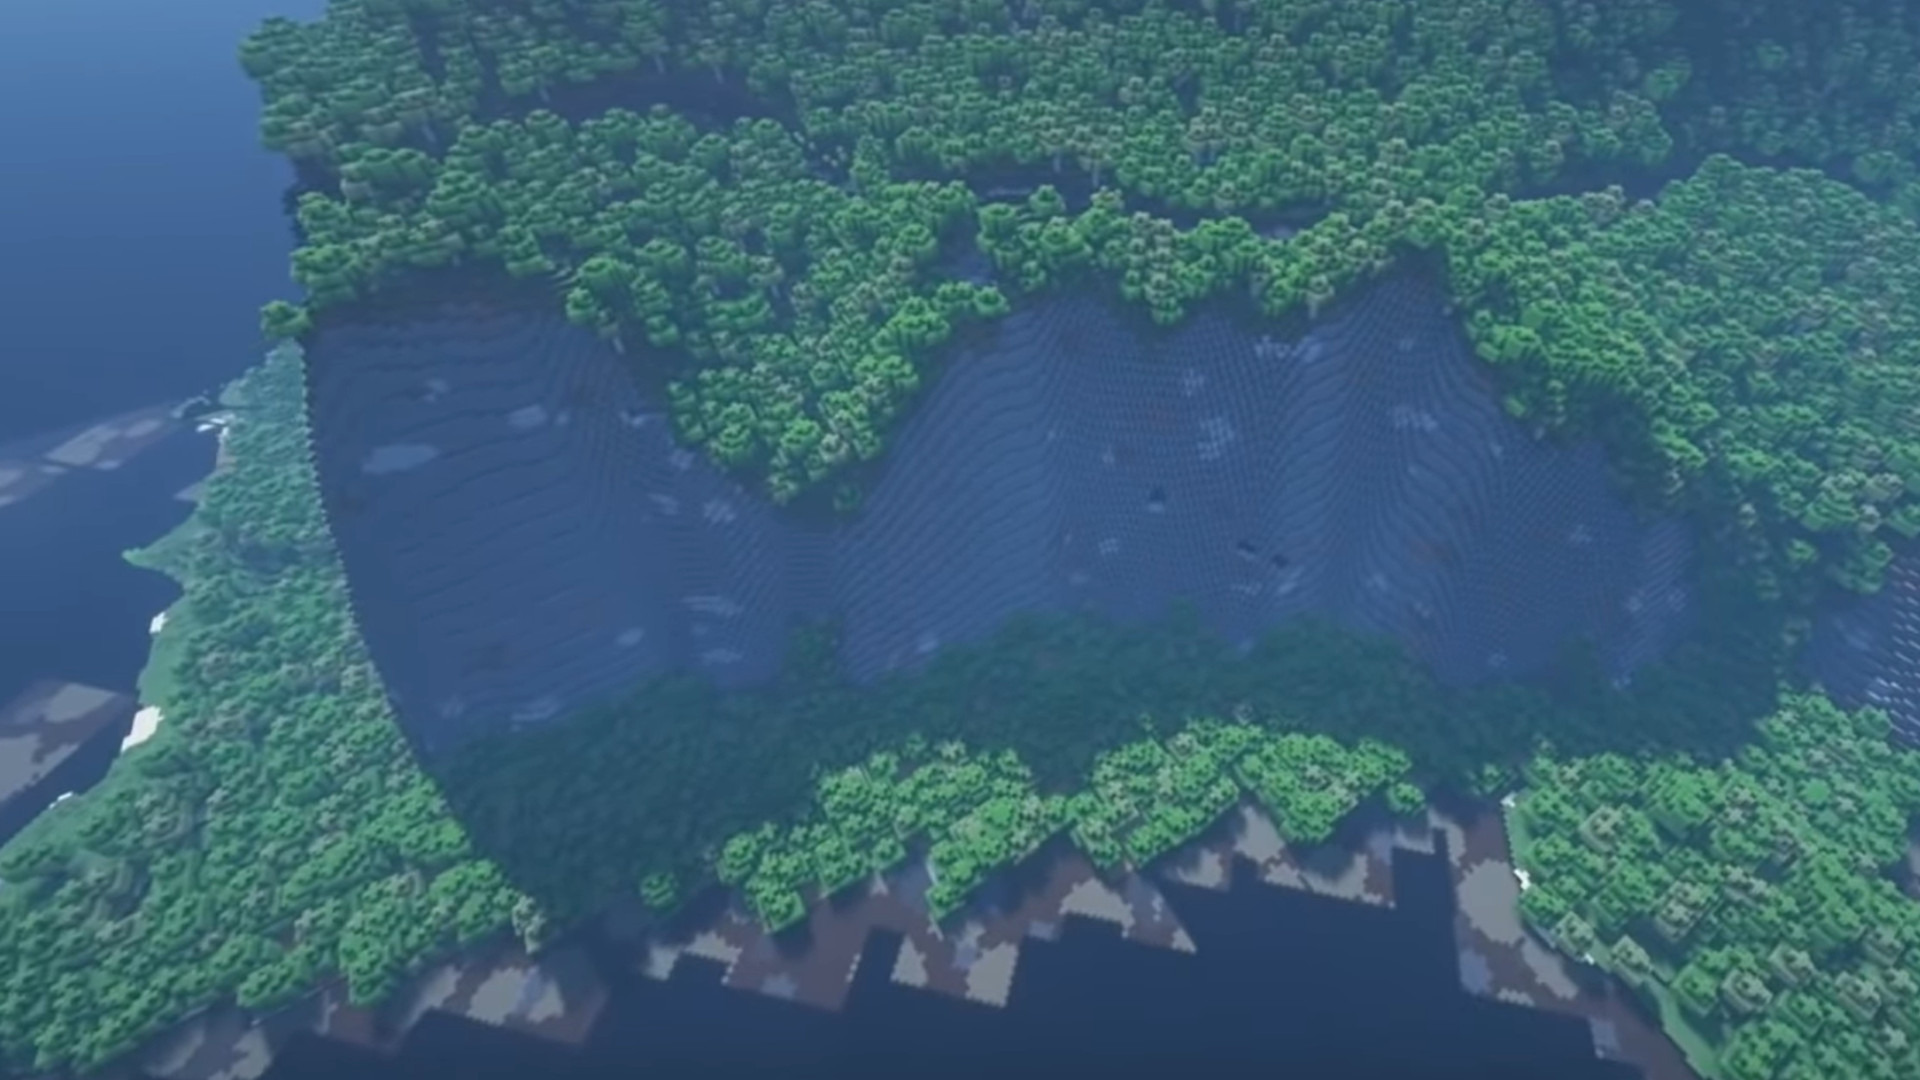 Minecraft earth map